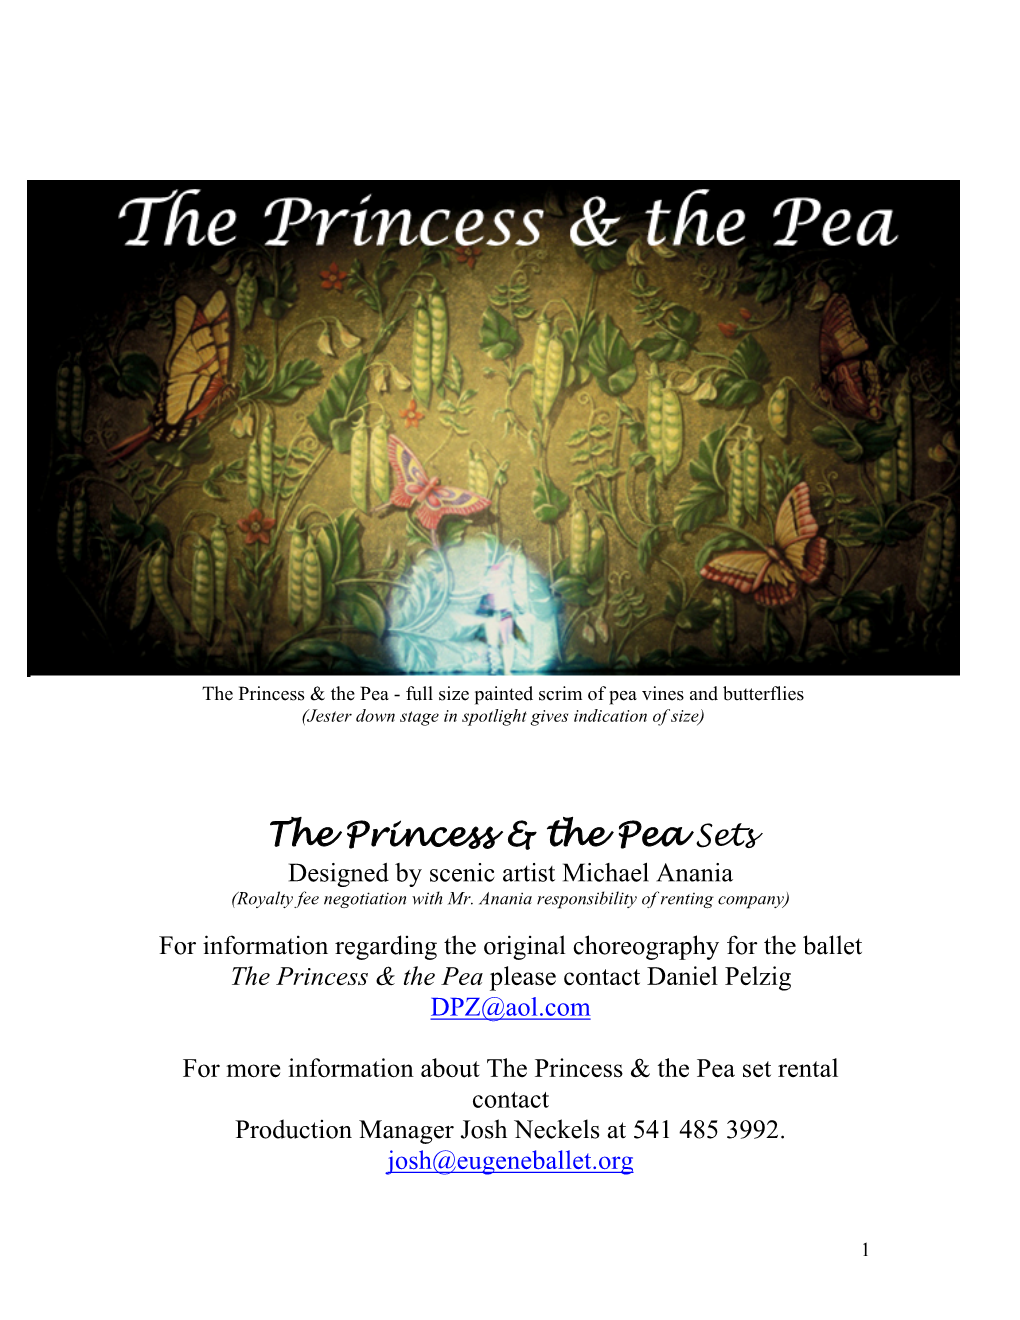 The Princess & the Pea Sets